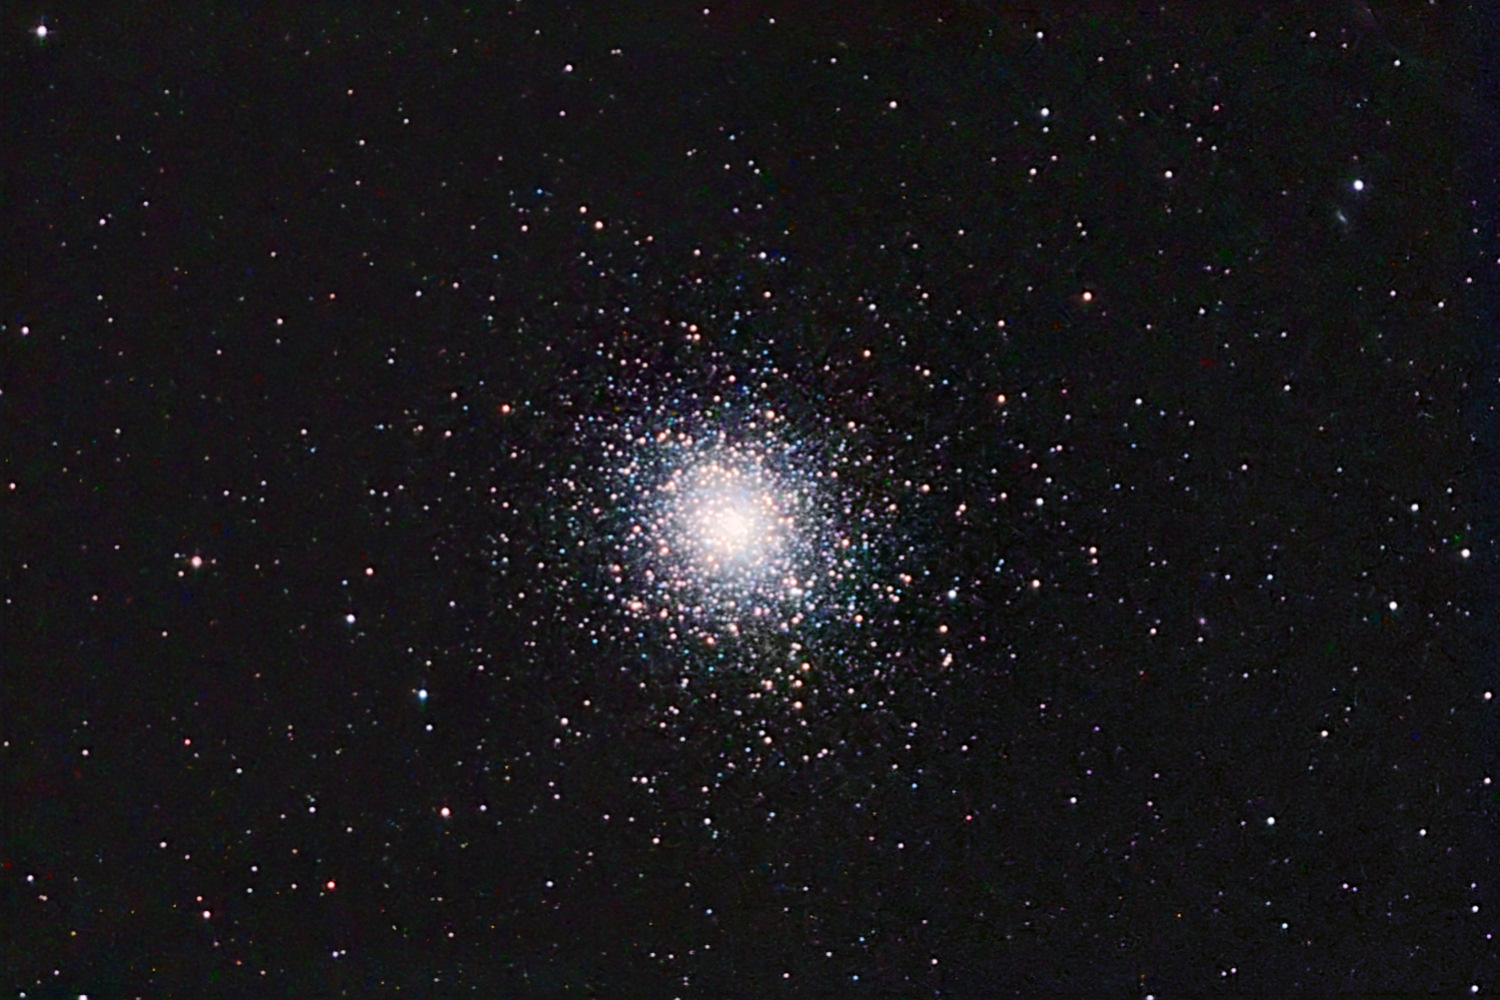 M5 - Globular Cluster in Serpens